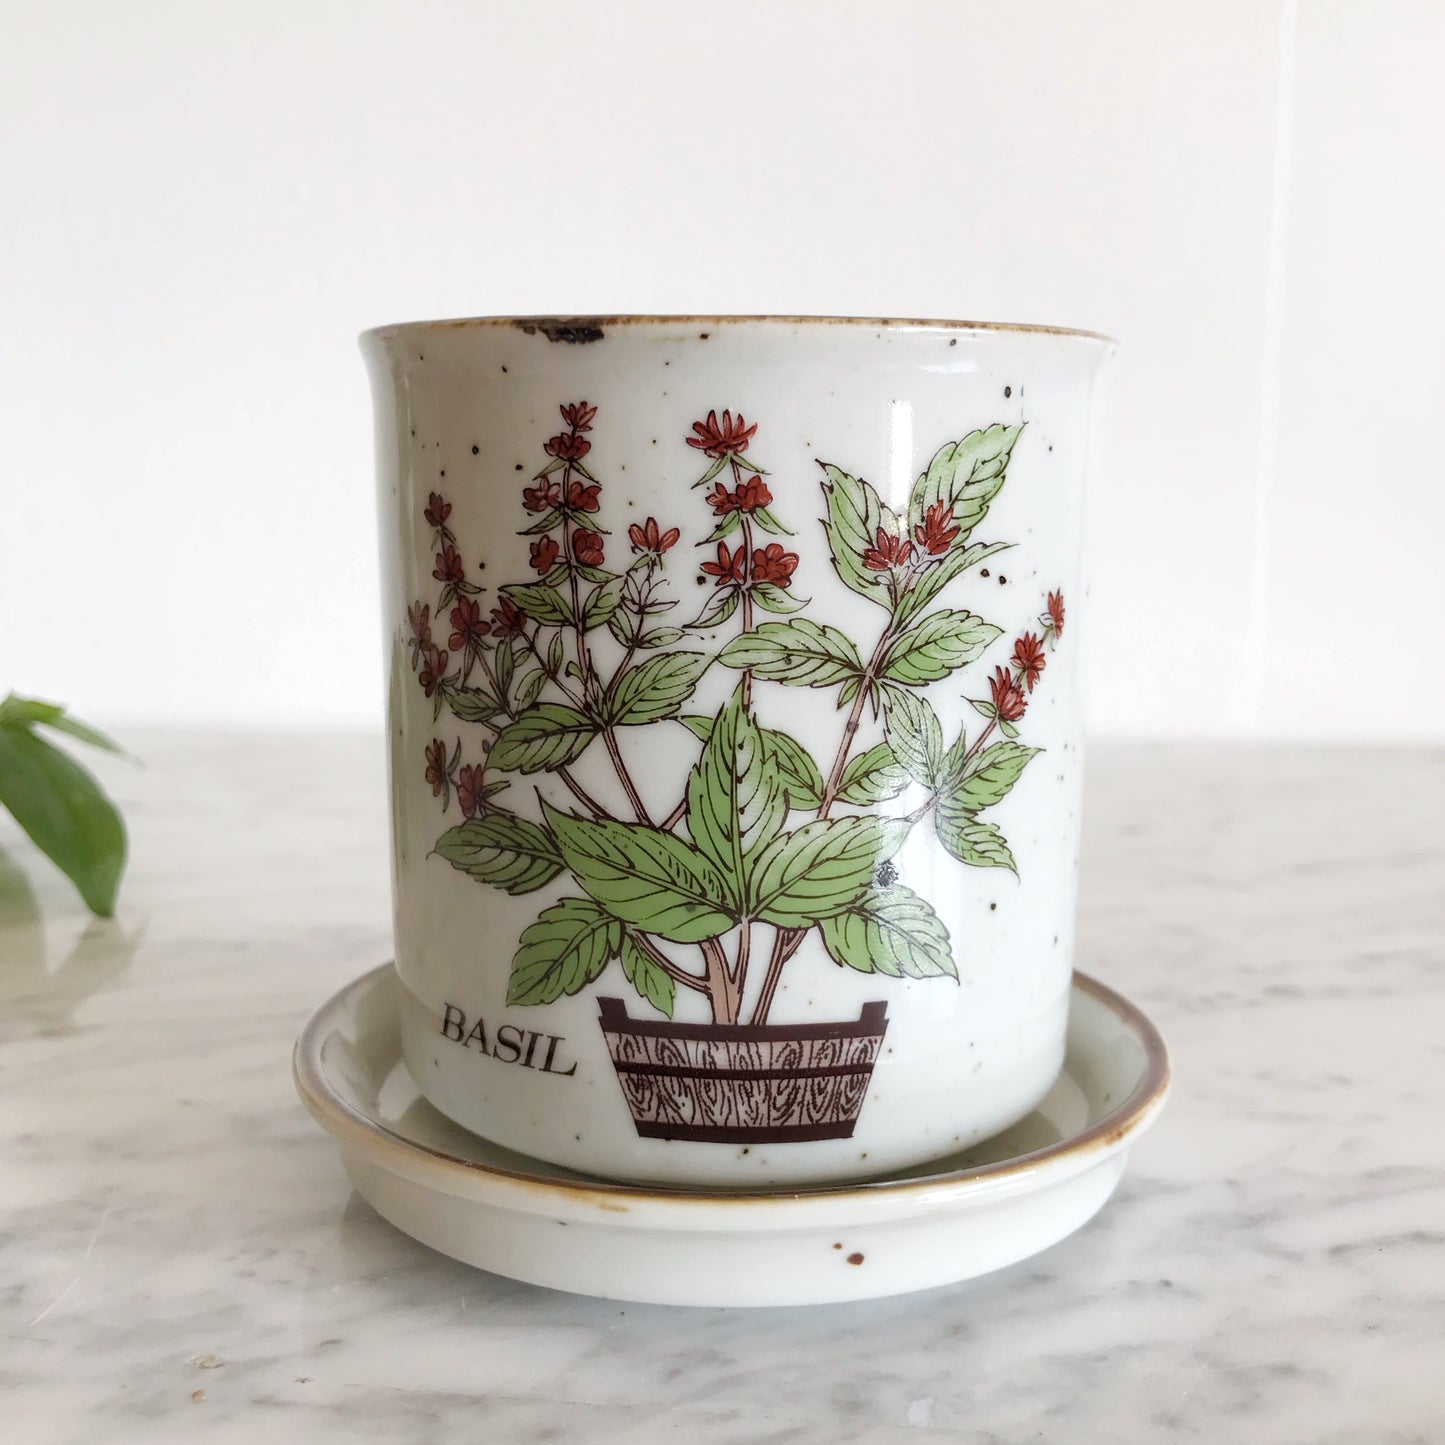 Vintage Ceramic  “Basil” Planter, Japan